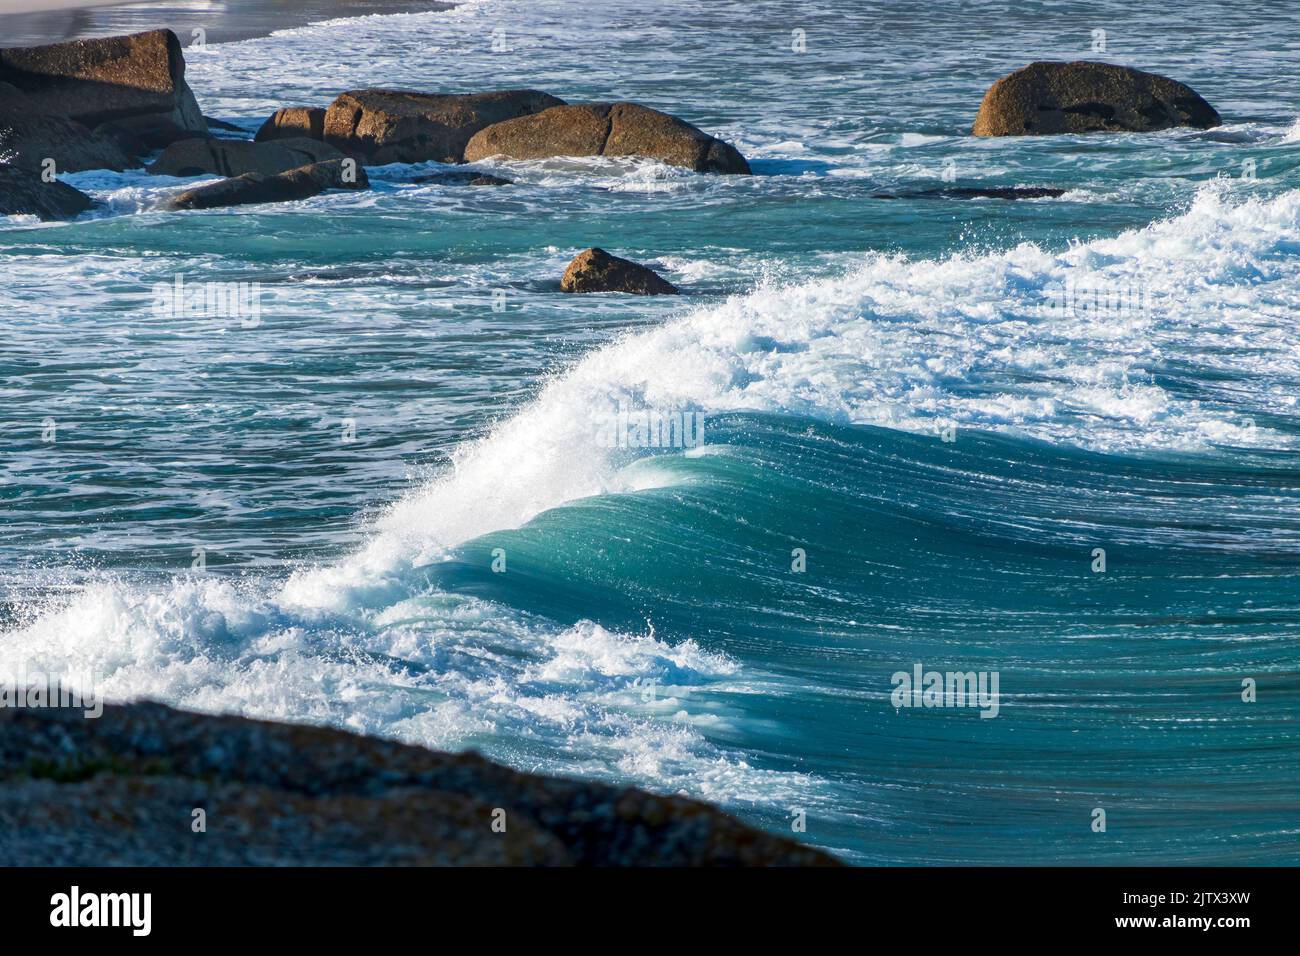 White sea foam on the coastal waves of the Atlantic Ocean. South Africa Stock Photo